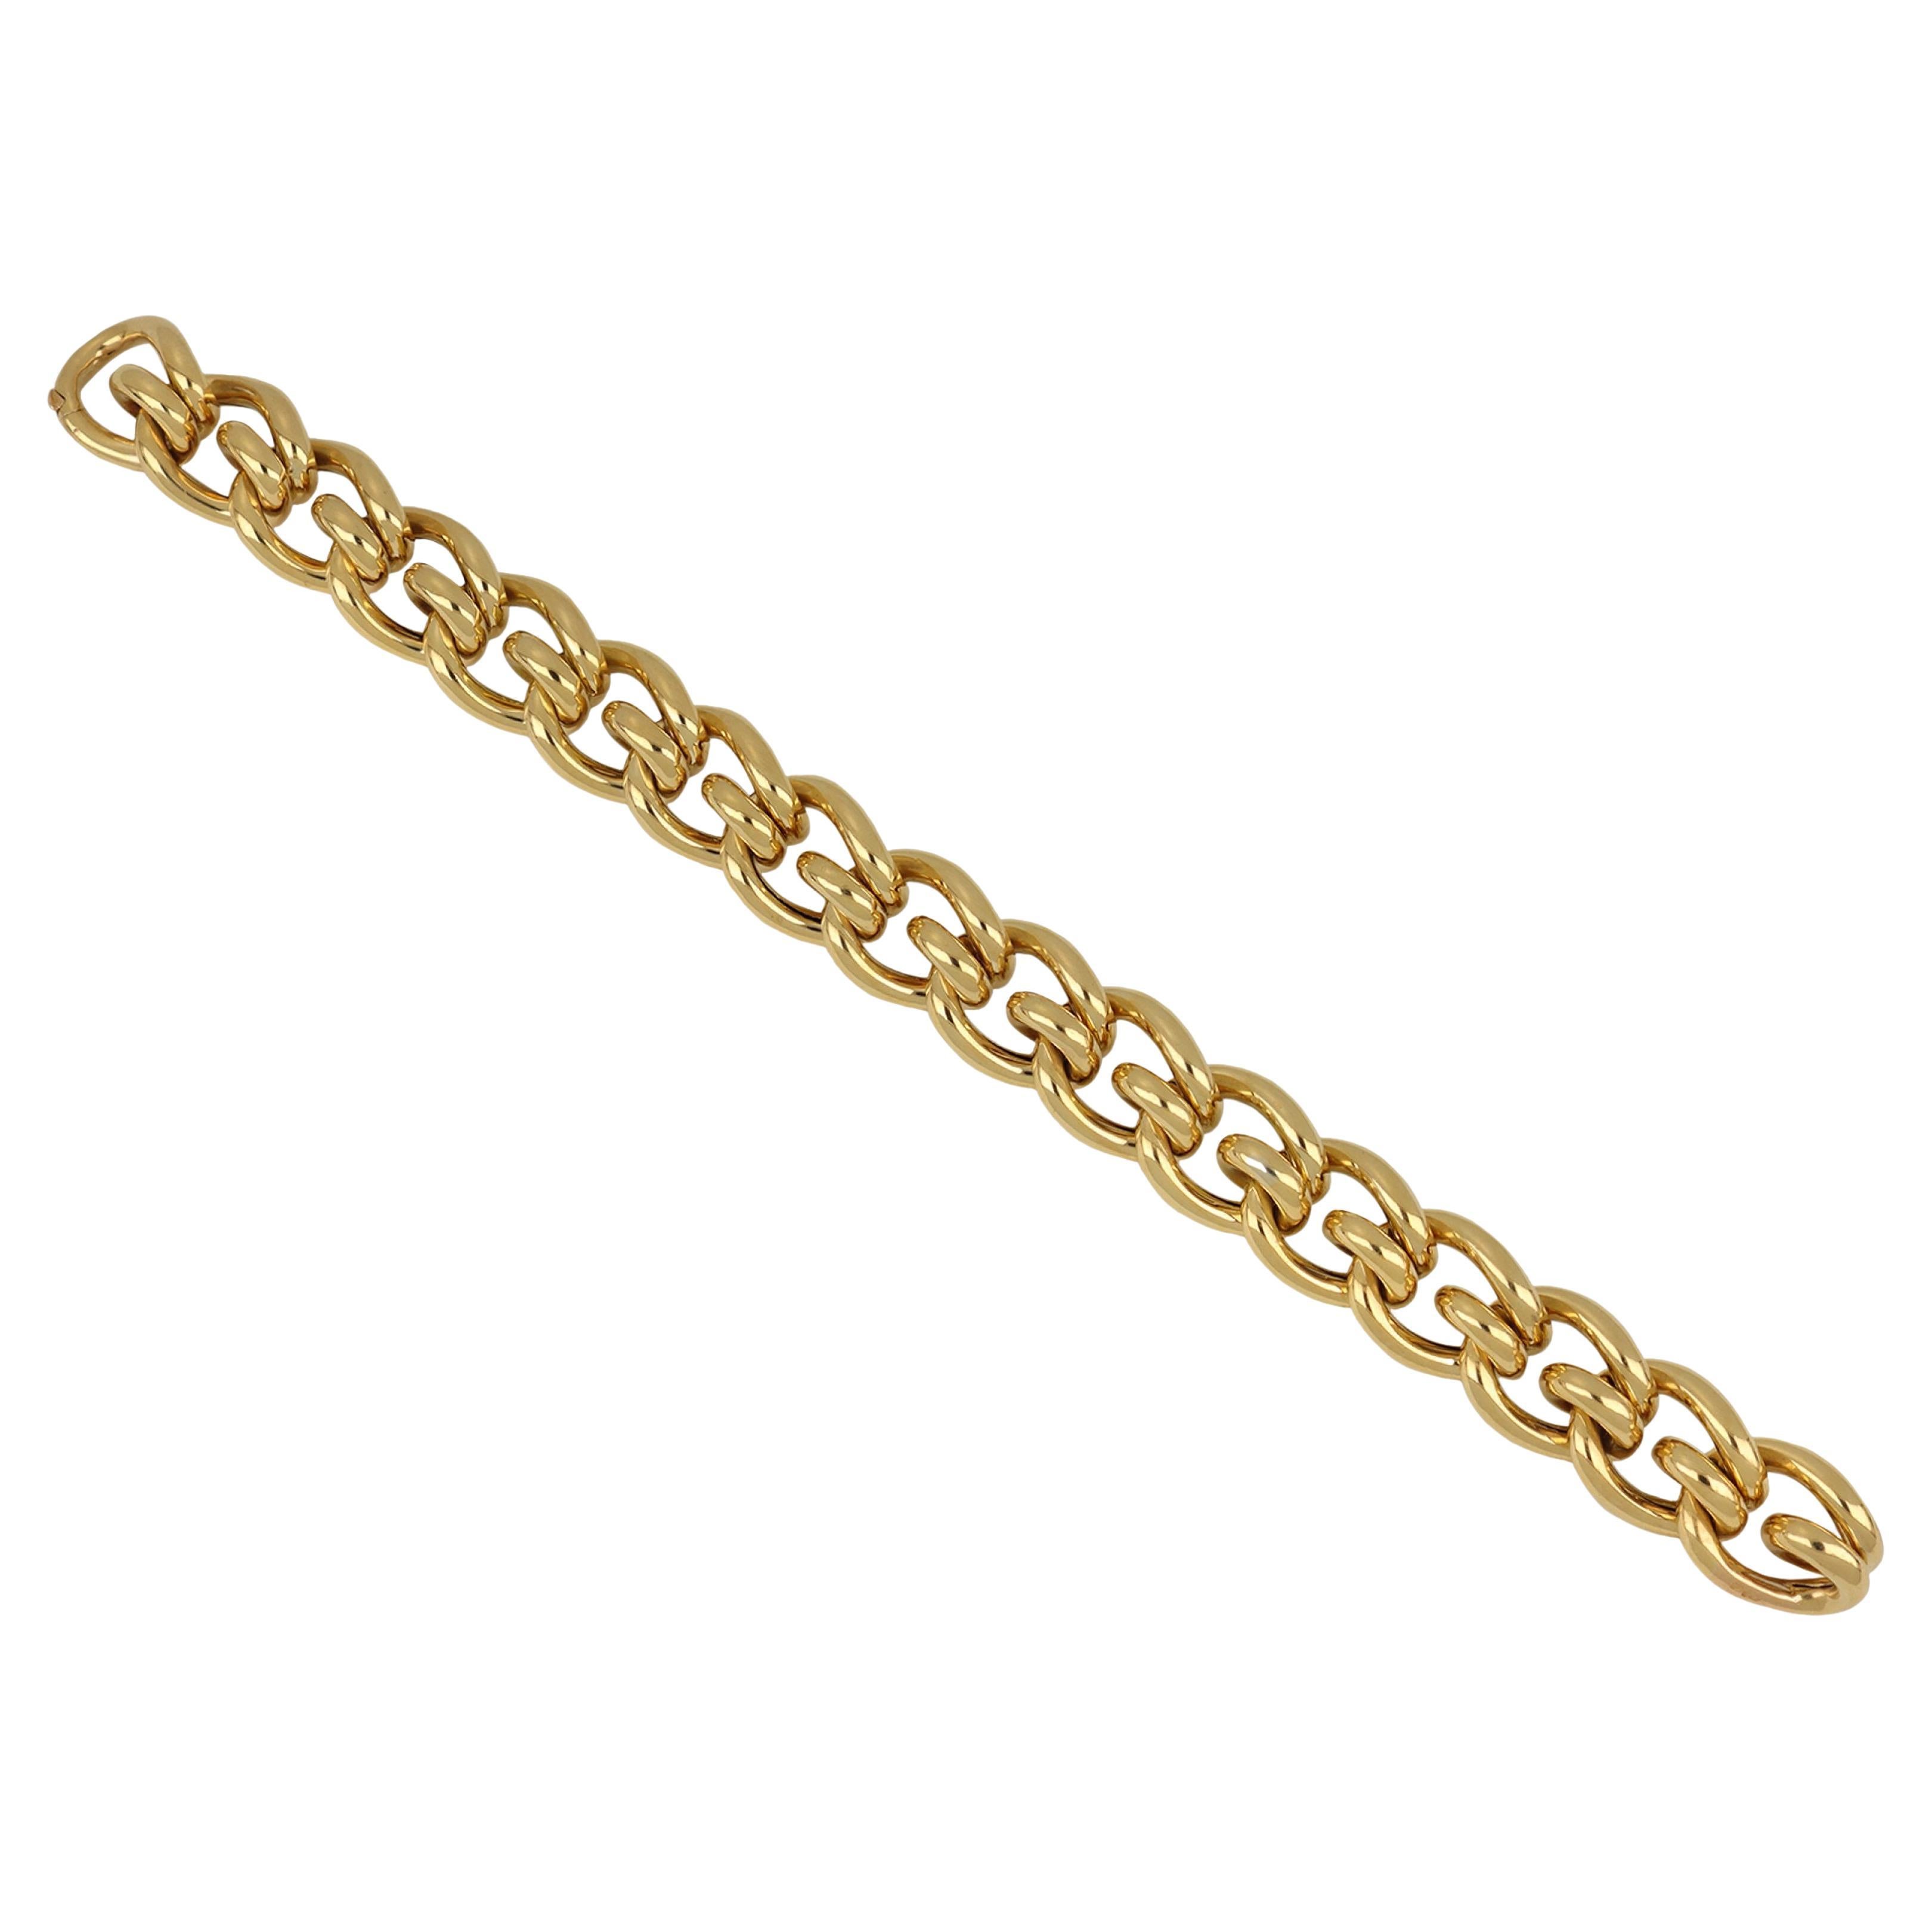 Cartier gold mousetrap link bracelet, French, circa 1945